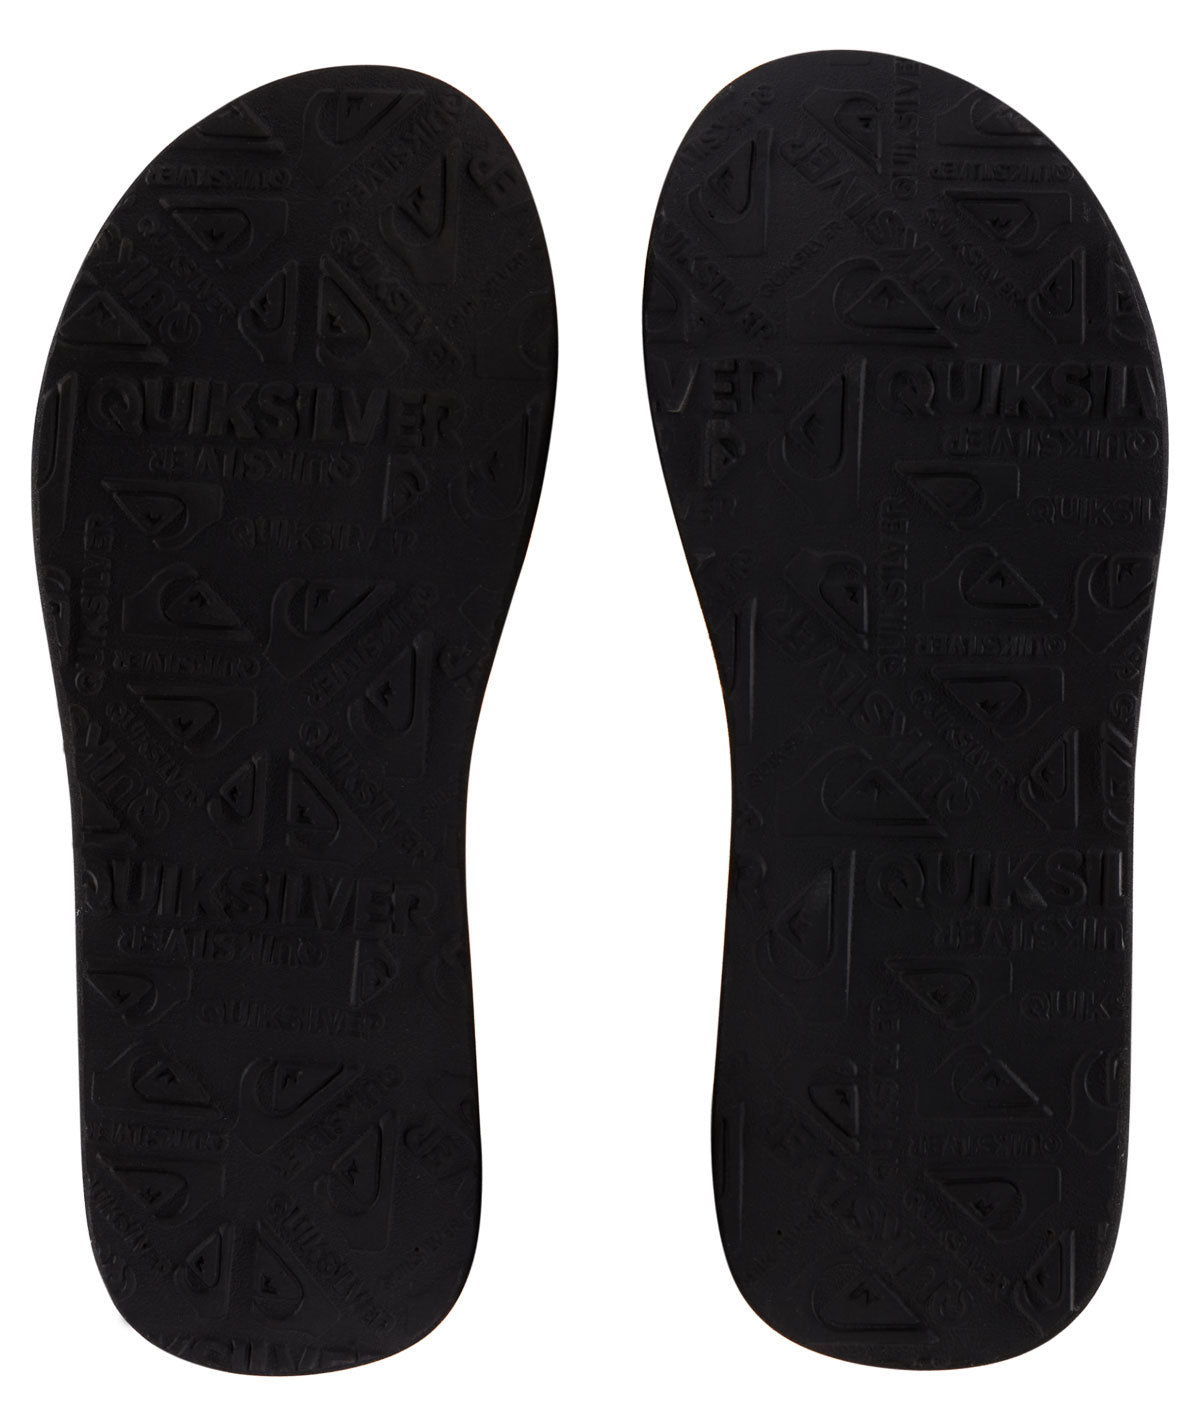 Quksilver: Carver Suede Leather Sandals